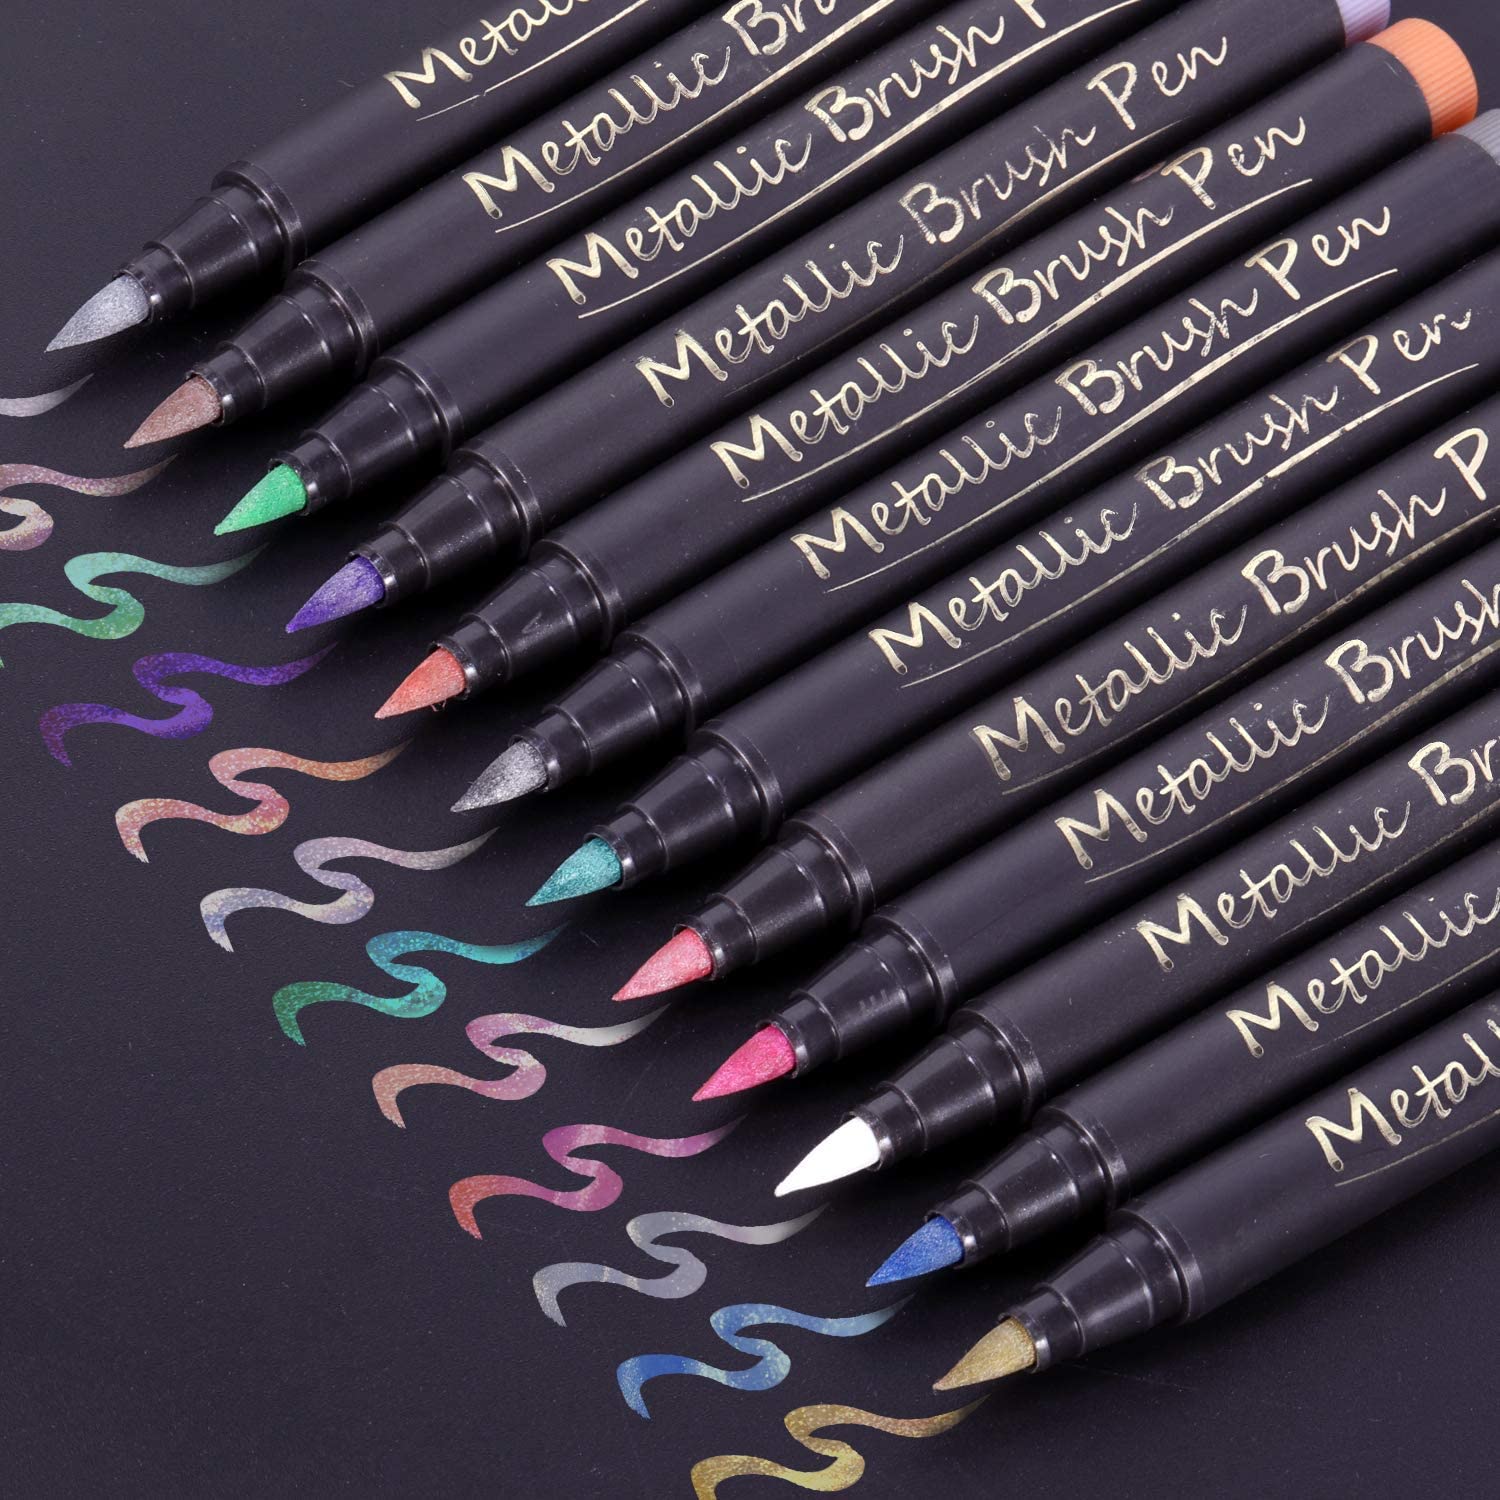 Ohuhu メタリックペン 筆先 89%OFF 12色セット マーカーペン キ 水性 0.7-6mm 人気上昇中 メタリック色